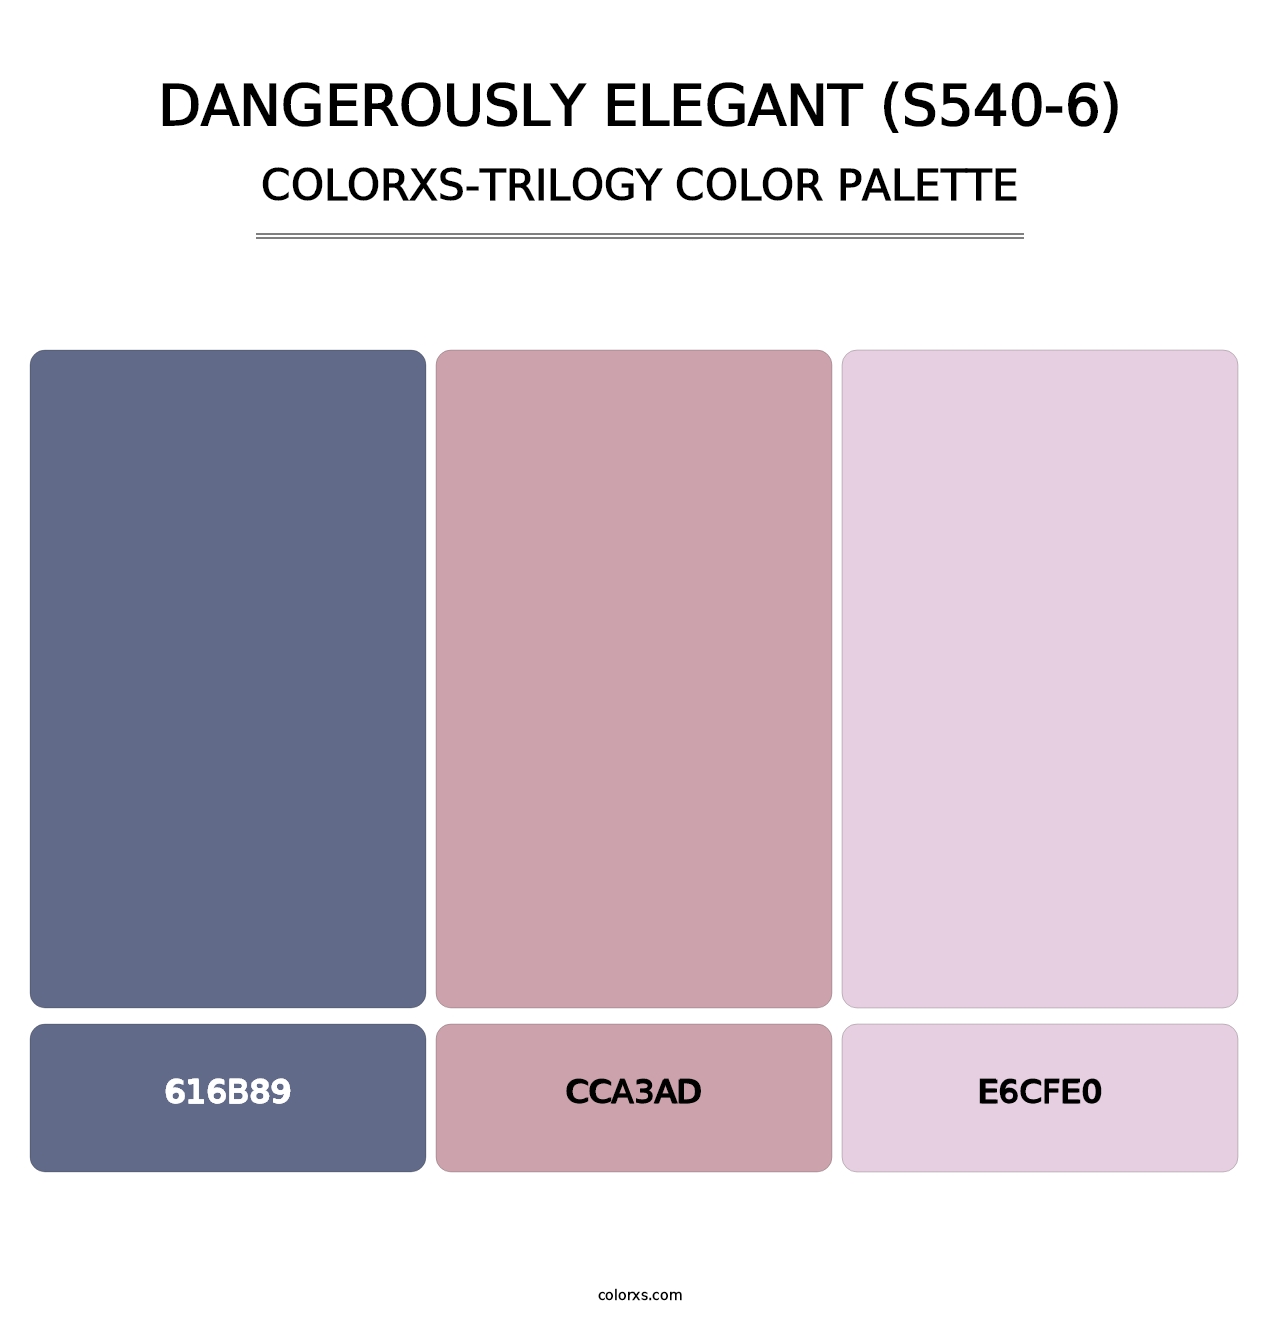 Dangerously Elegant (S540-6) - Colorxs Trilogy Palette